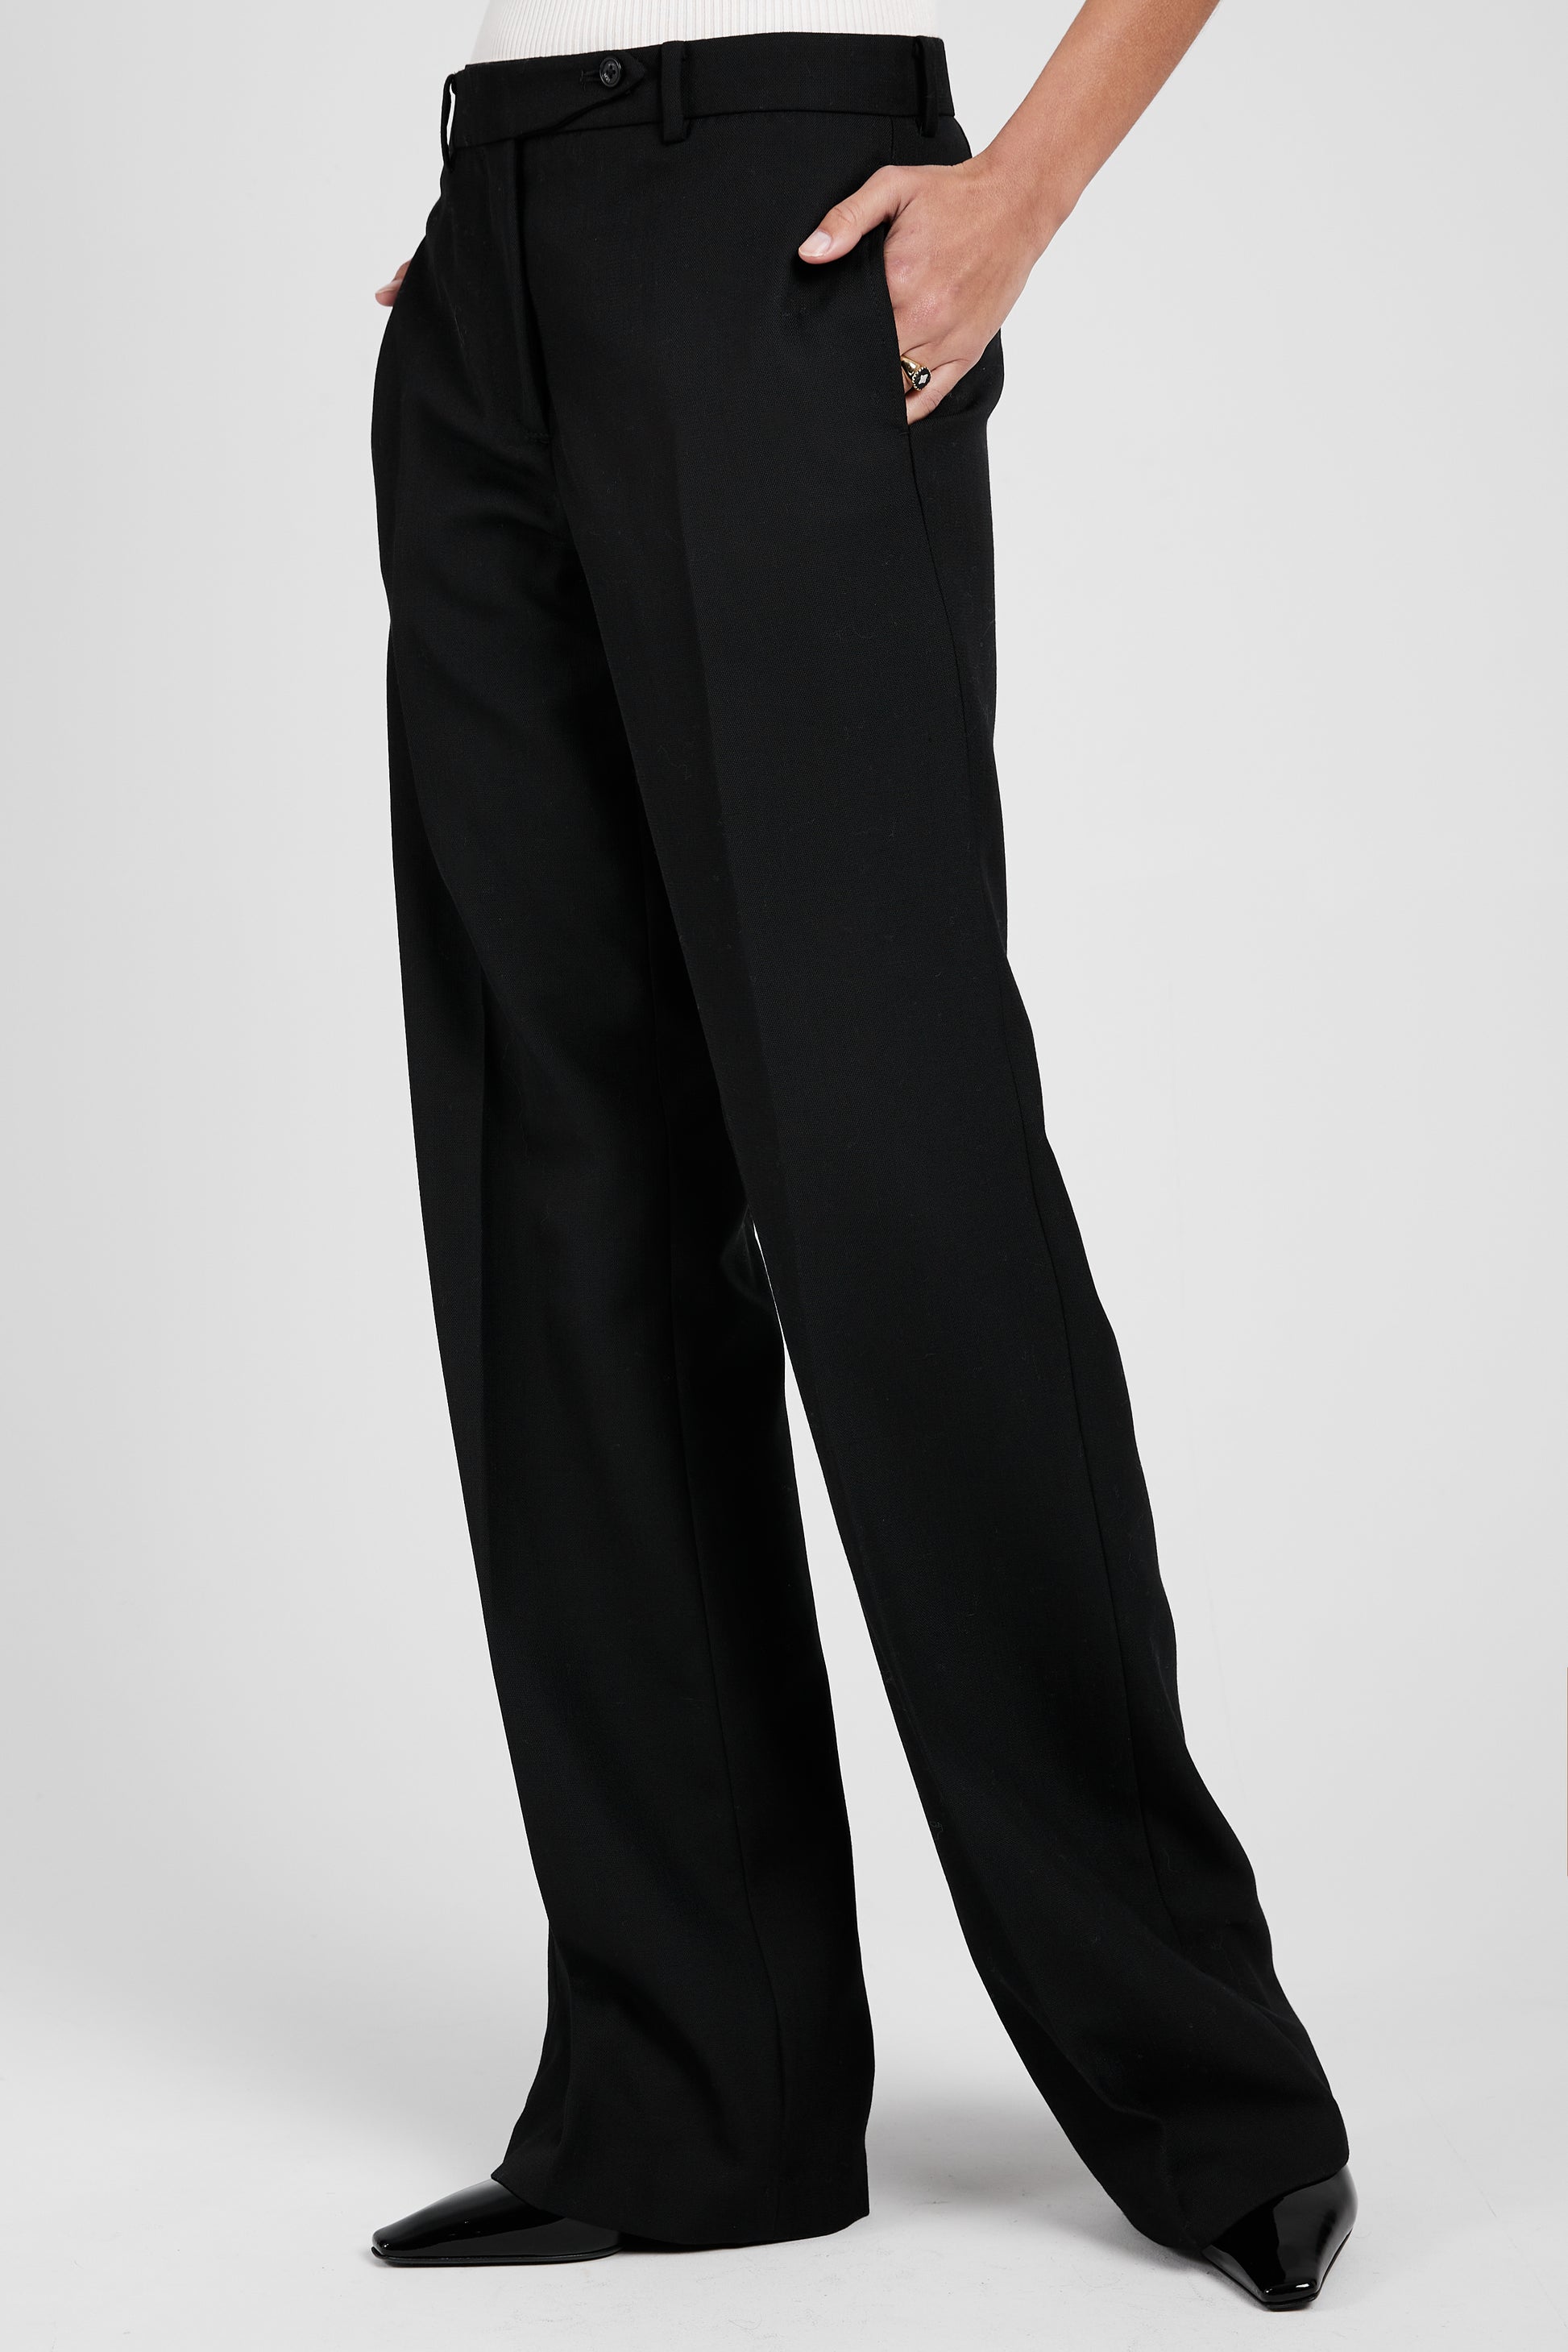 N°21 Woven Trouser Pant in Black